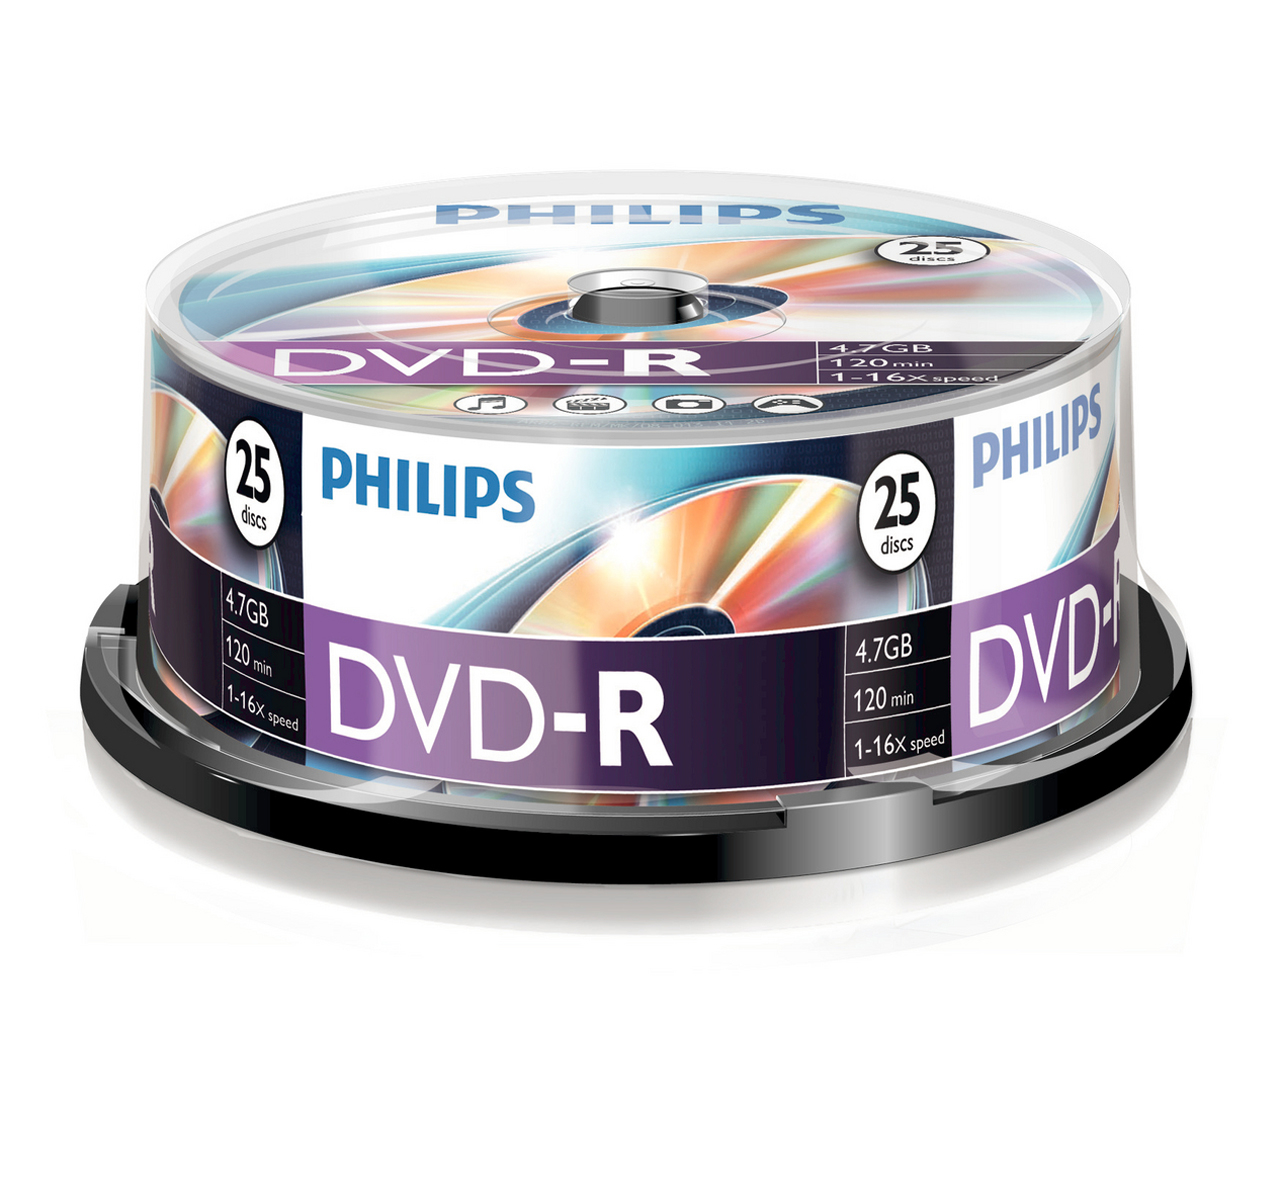 PHILIPS DVD-R Spindle 4.7GB 5749 16x 25 Pcs 16x 25 Pcs